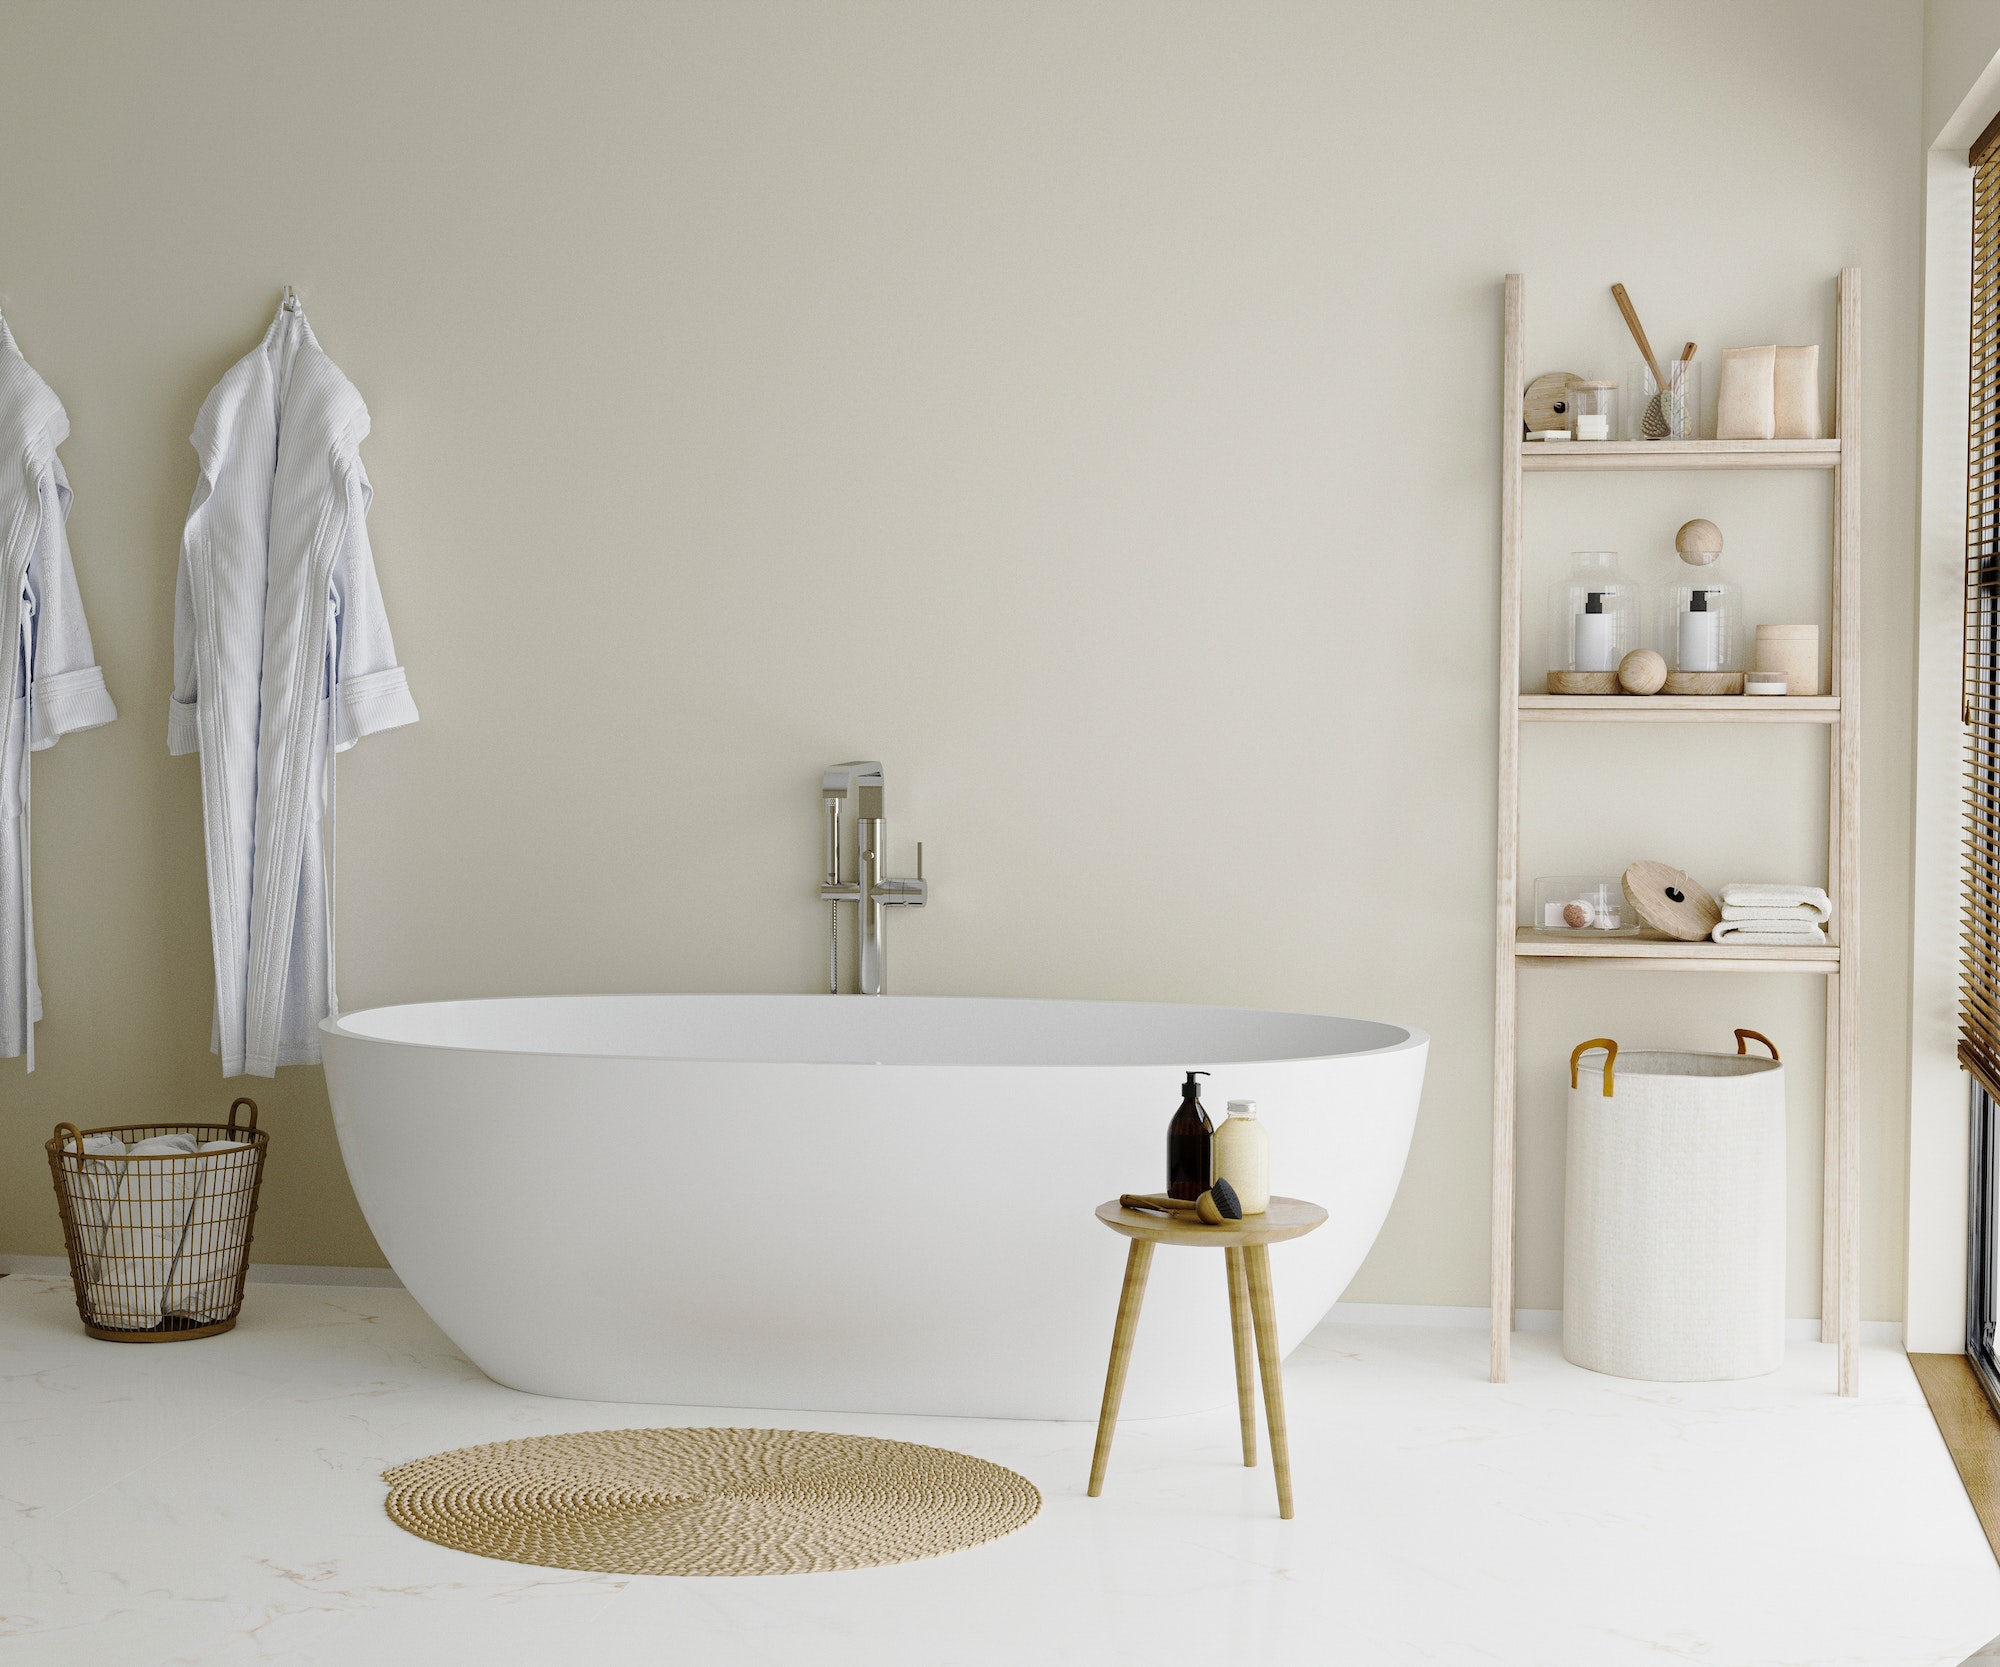 10 Oasis Spa-Like Master Bathroom Ideas With Freestanding Tub